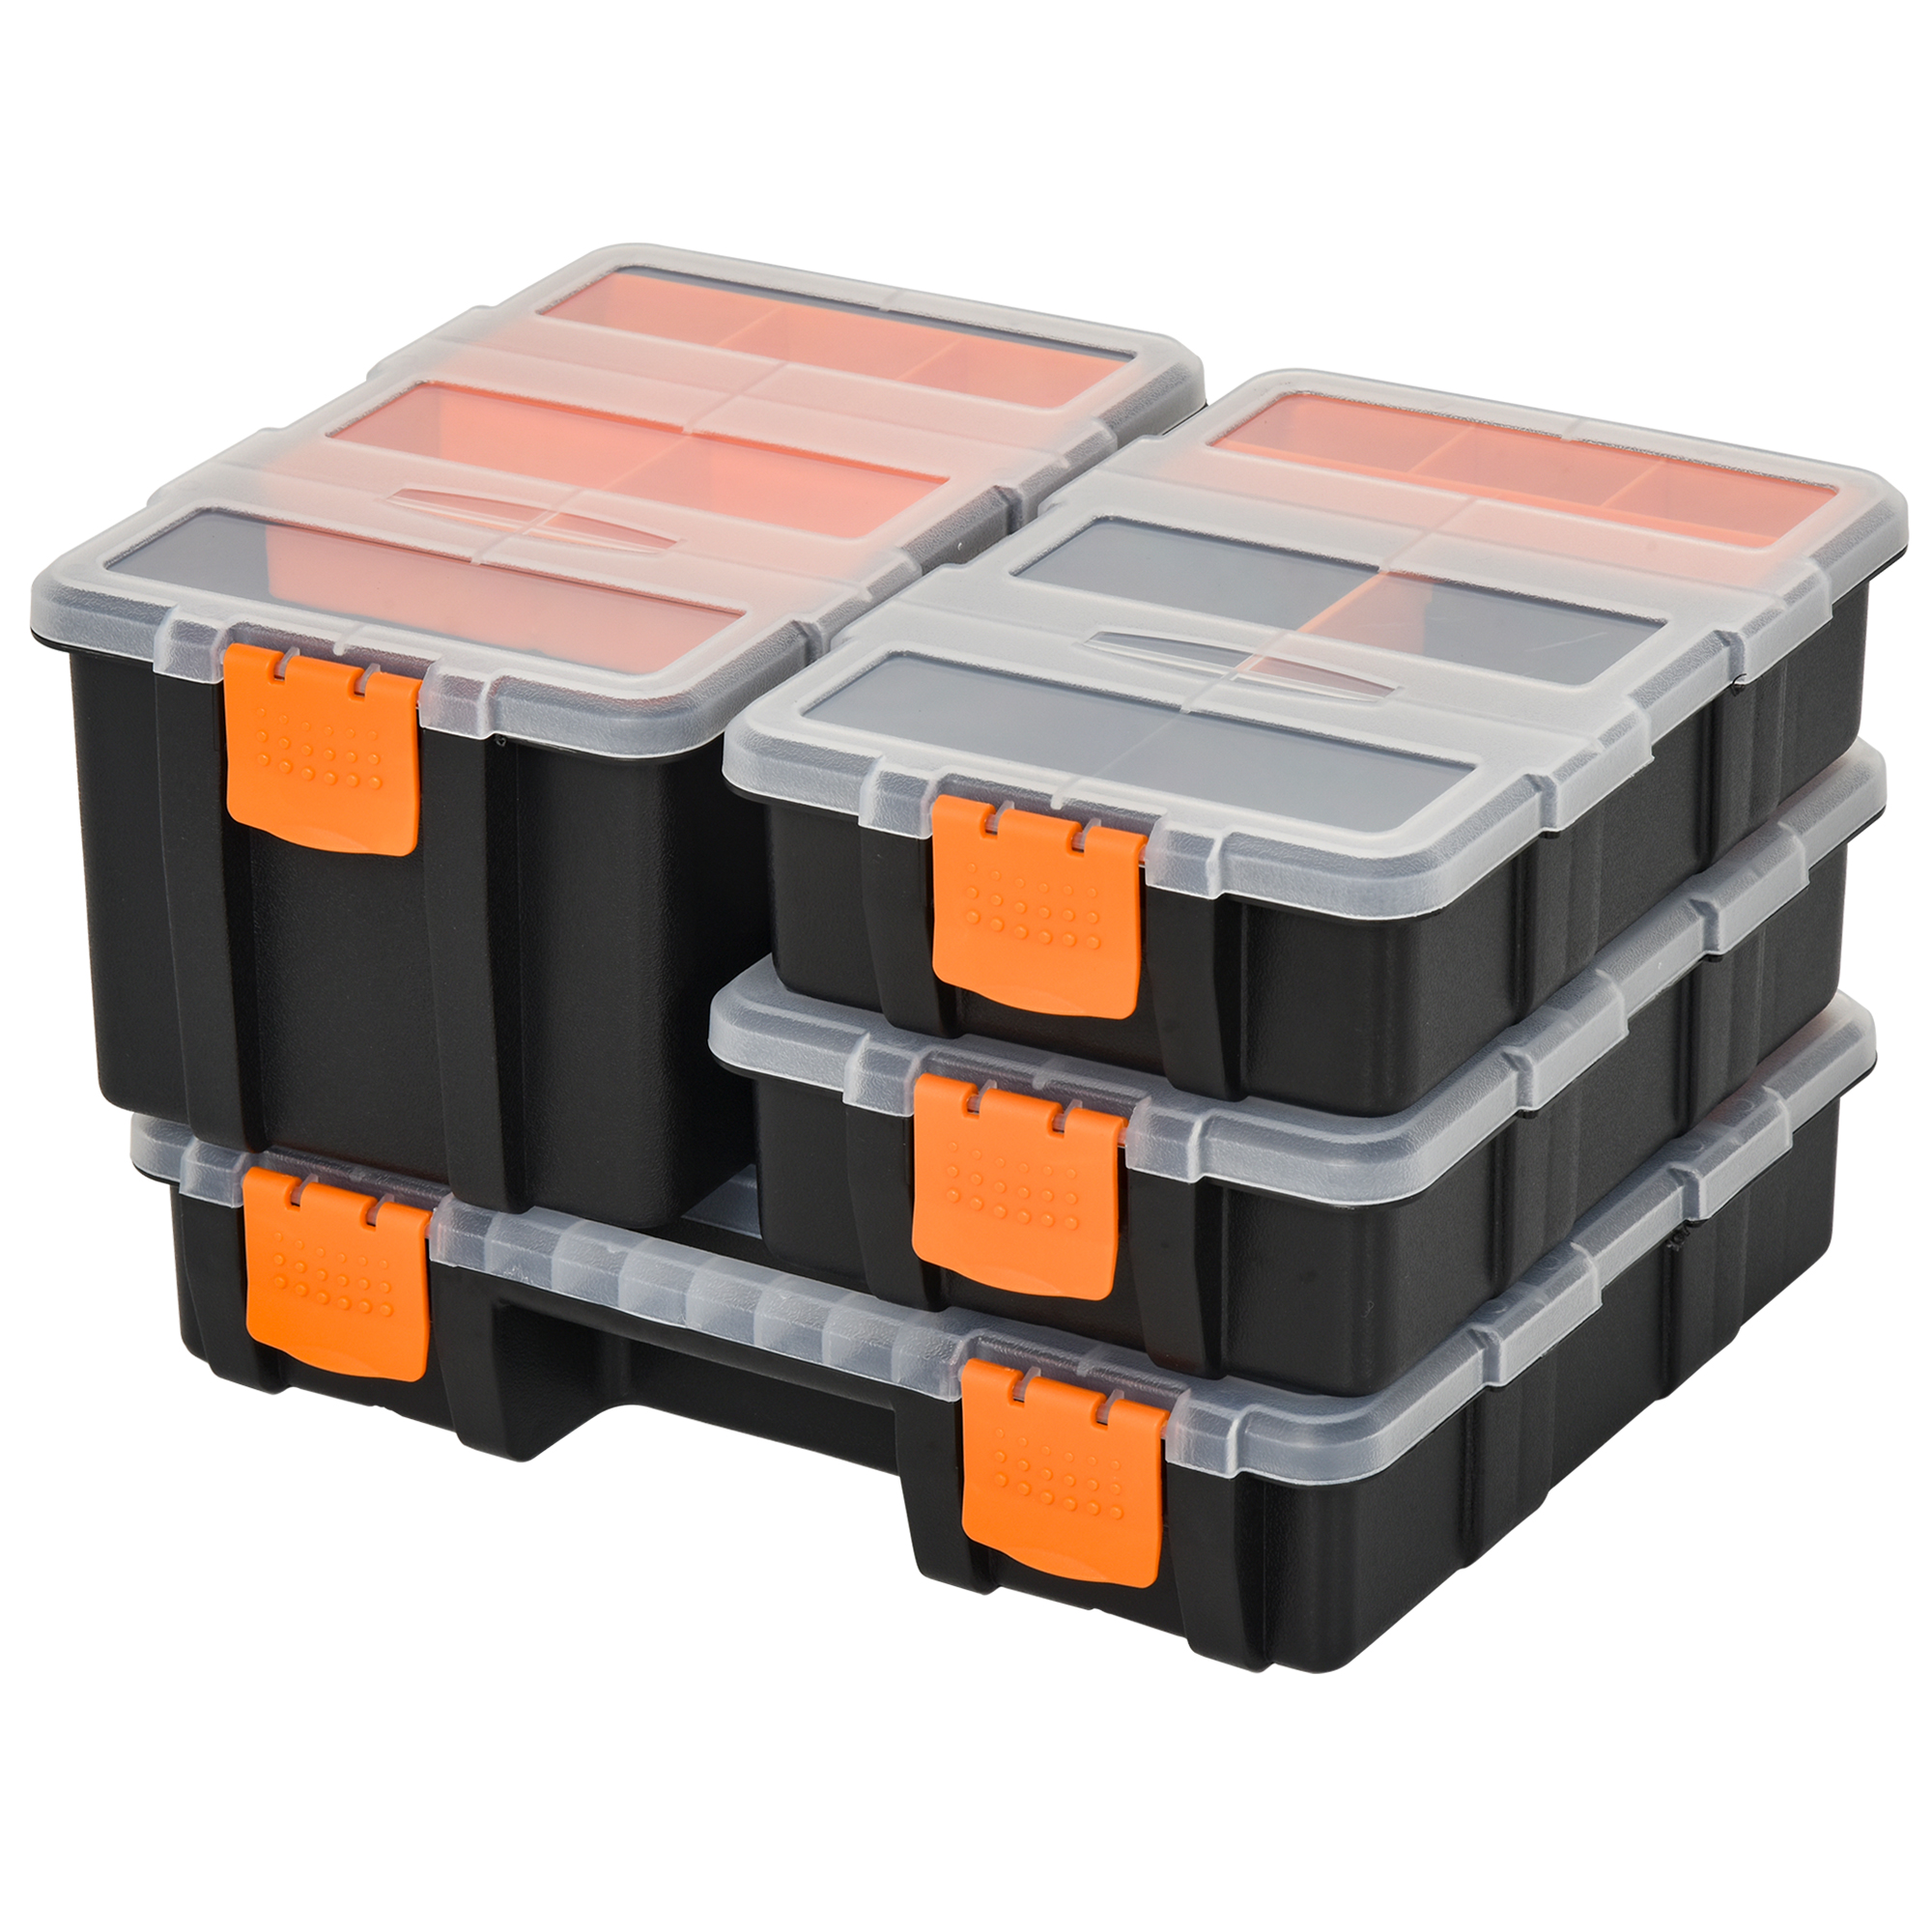 Image of DURHAND PP 4-Pack Size Variety Tool & Hardware Storage Boxes Black/Orange